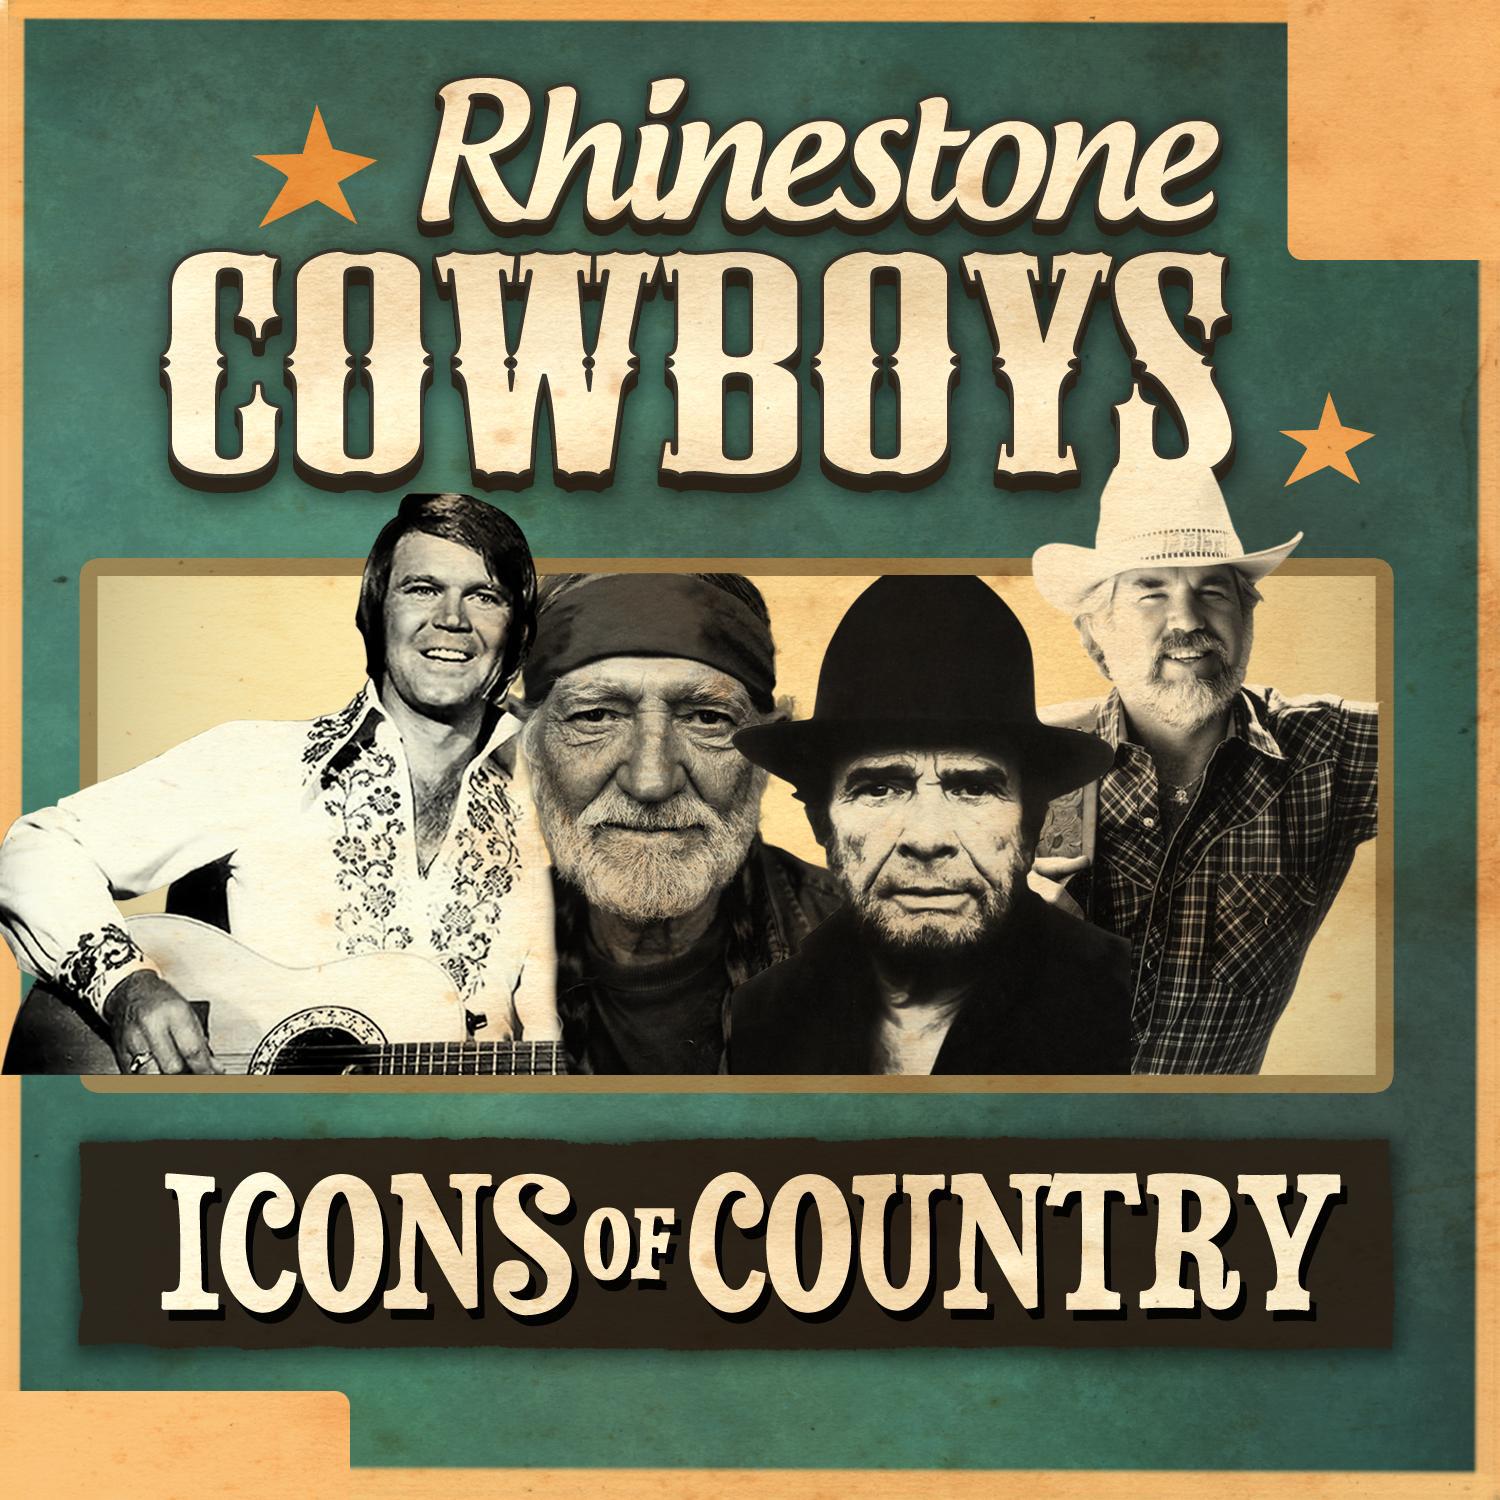 Rhinestone Cowboys - Icons of Country